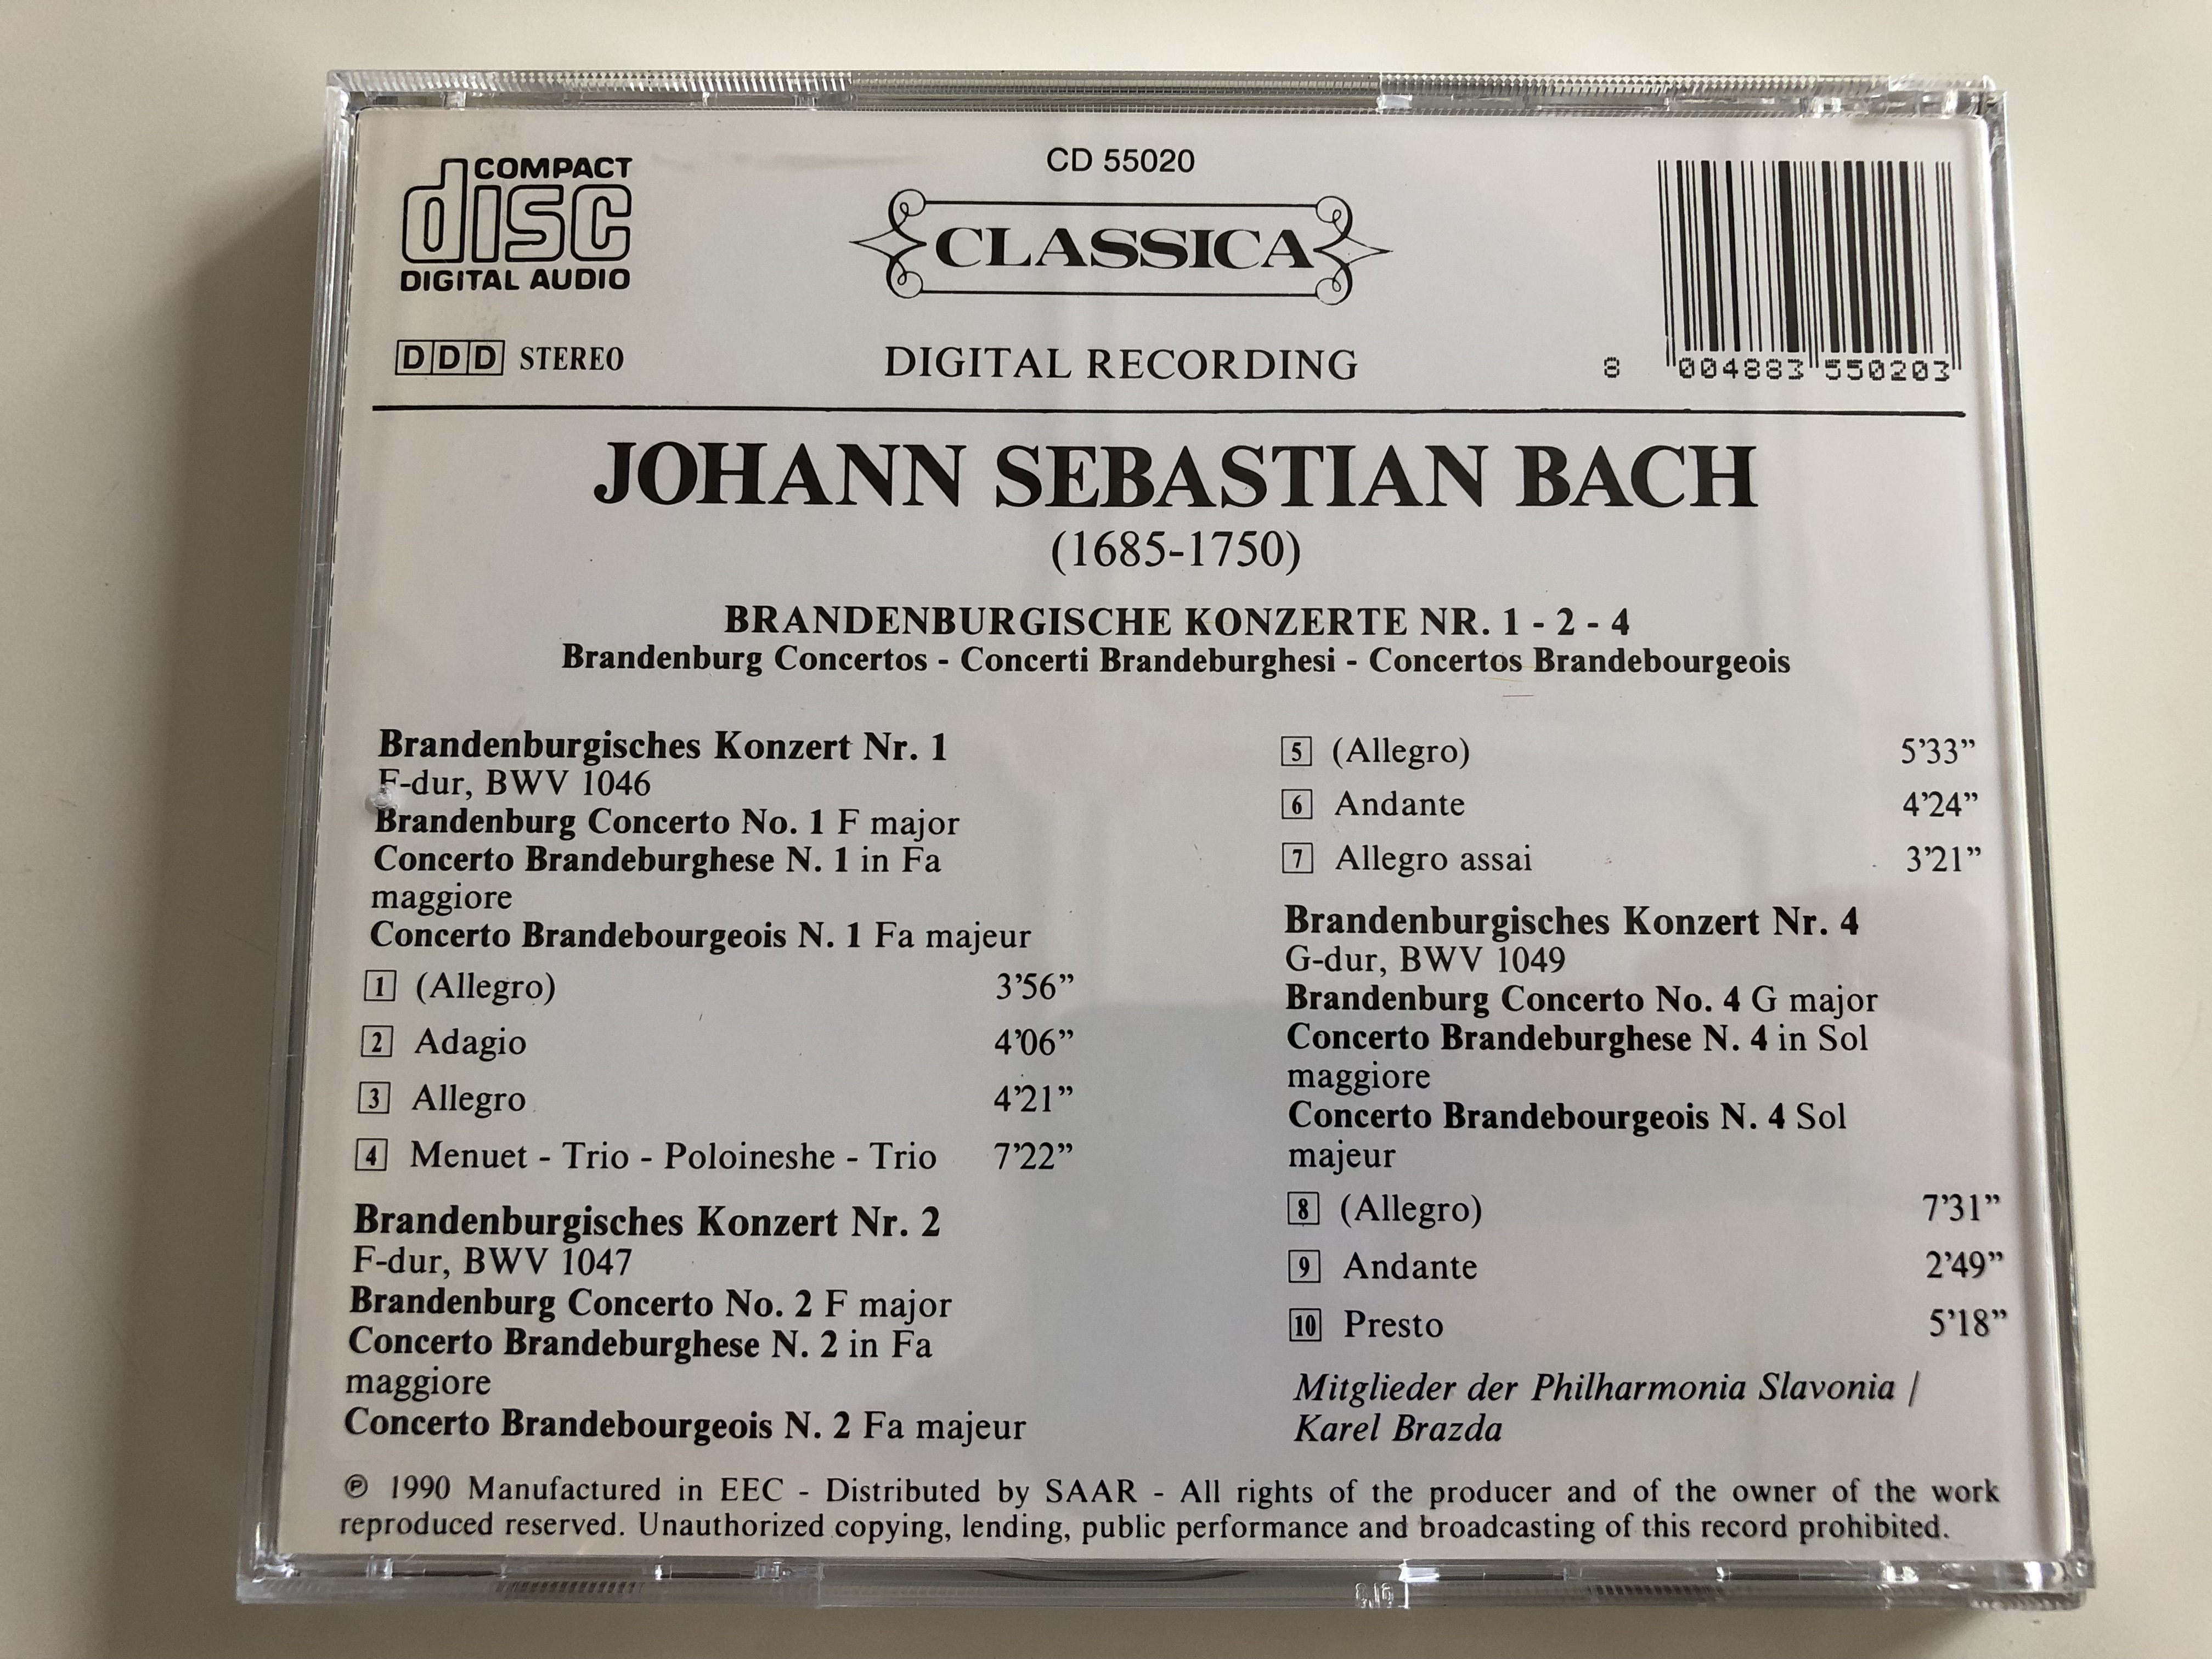 johann-sebastian-bach-brandenburgische-konzerte-nr.-1-2-4-mitglieder-der-philharmonia-slavonia-conducted-by-karel-brazda-audio-cd-1990-cd-55020-5-.jpg